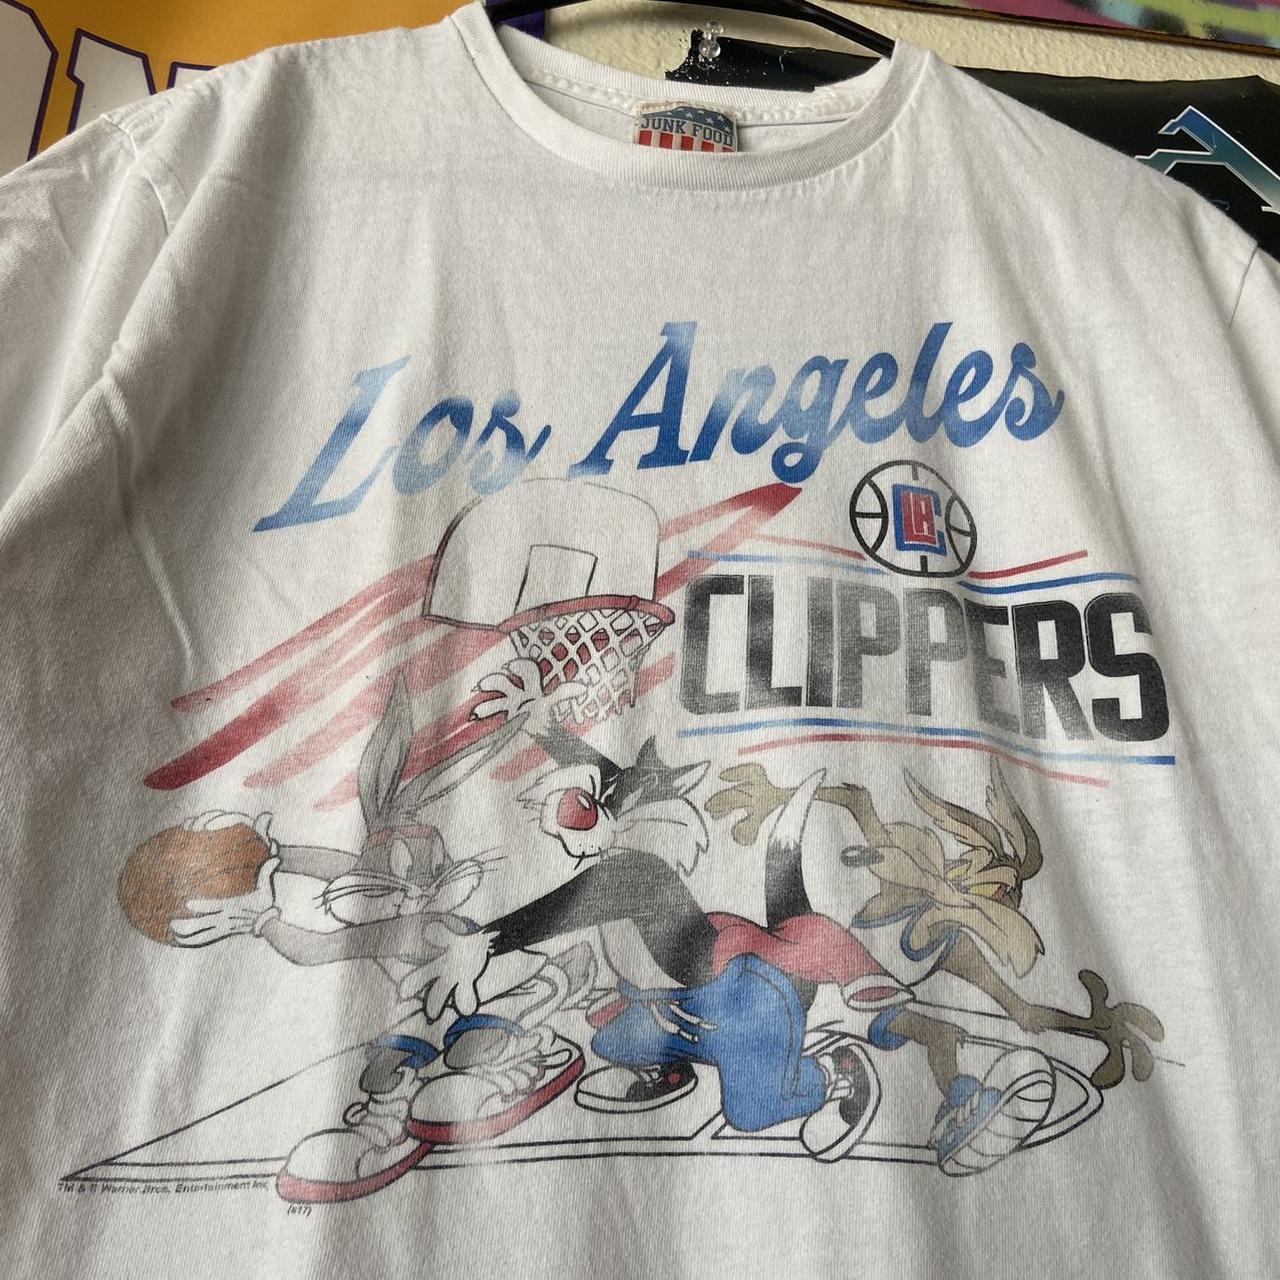 Junk Food Clothing, Shirts, Vintage Looney Tunes La Clippers Tshirt